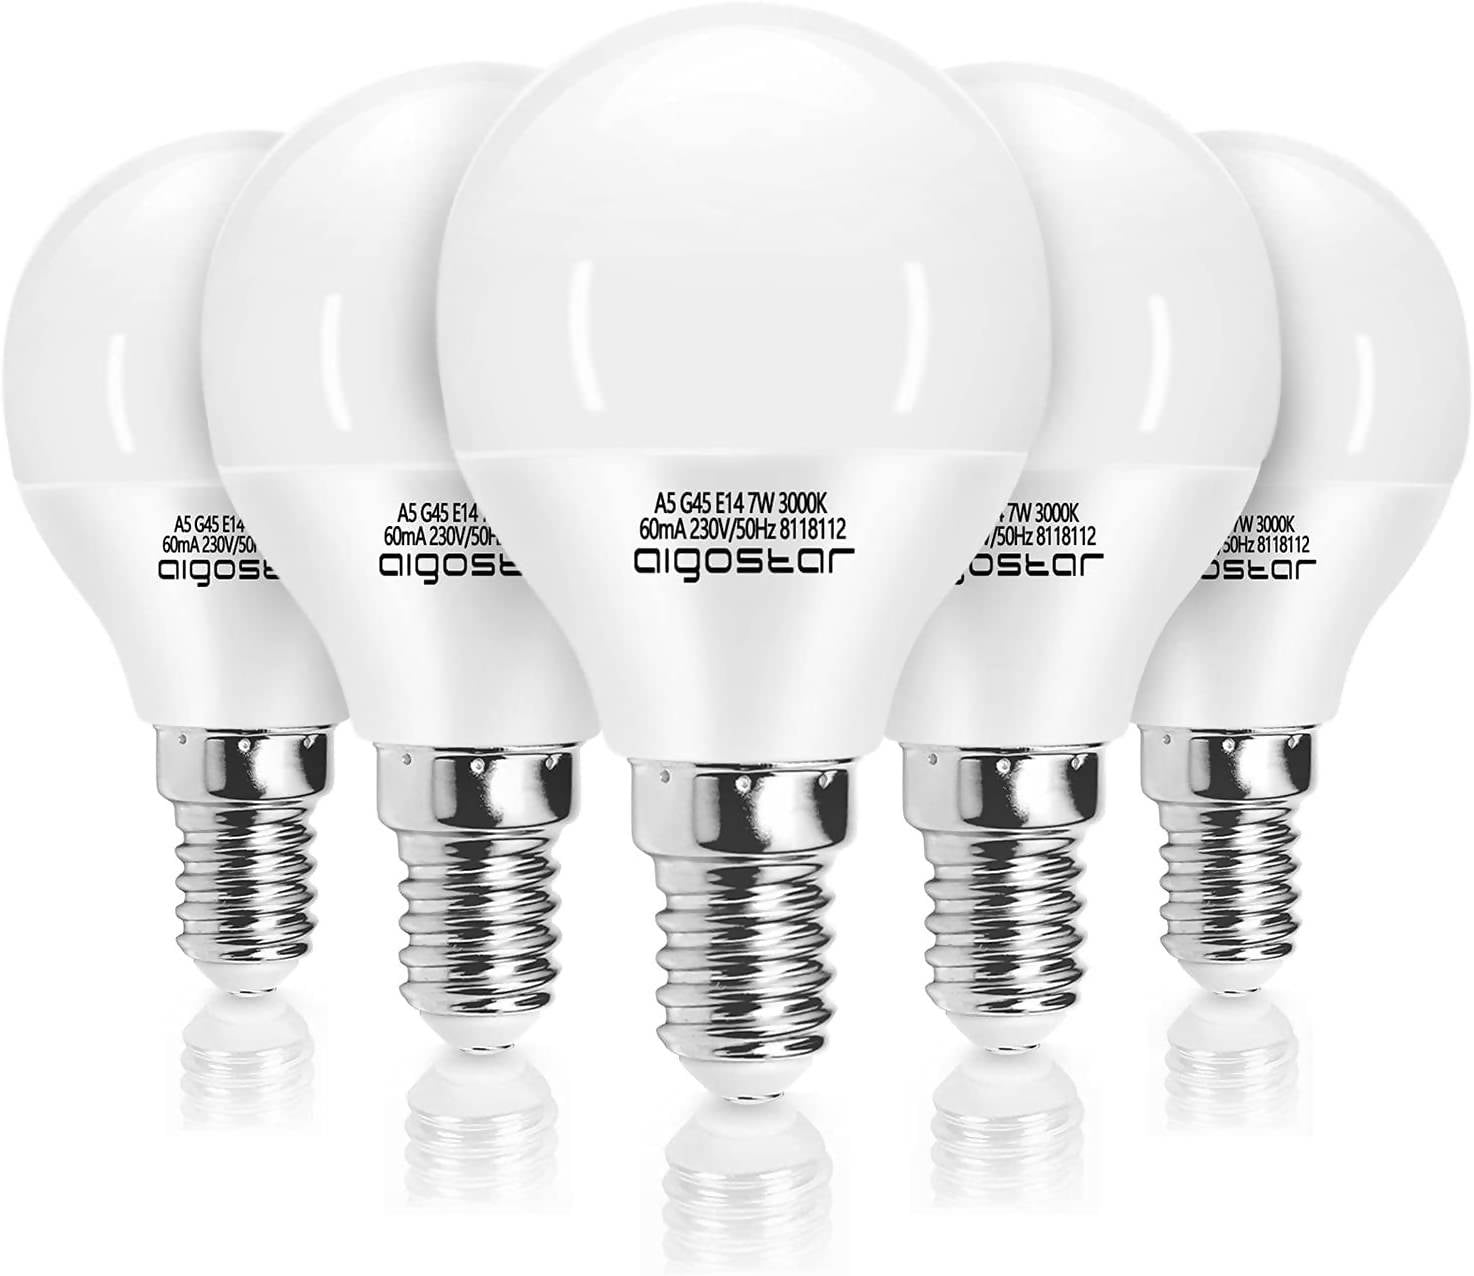 Aigostar - LED Lampe A5 G45 E14, 7W(ersetzt 50W), warmes Licht 3000K, 470 Lumen, 5er Pack [Energieklasse A+]